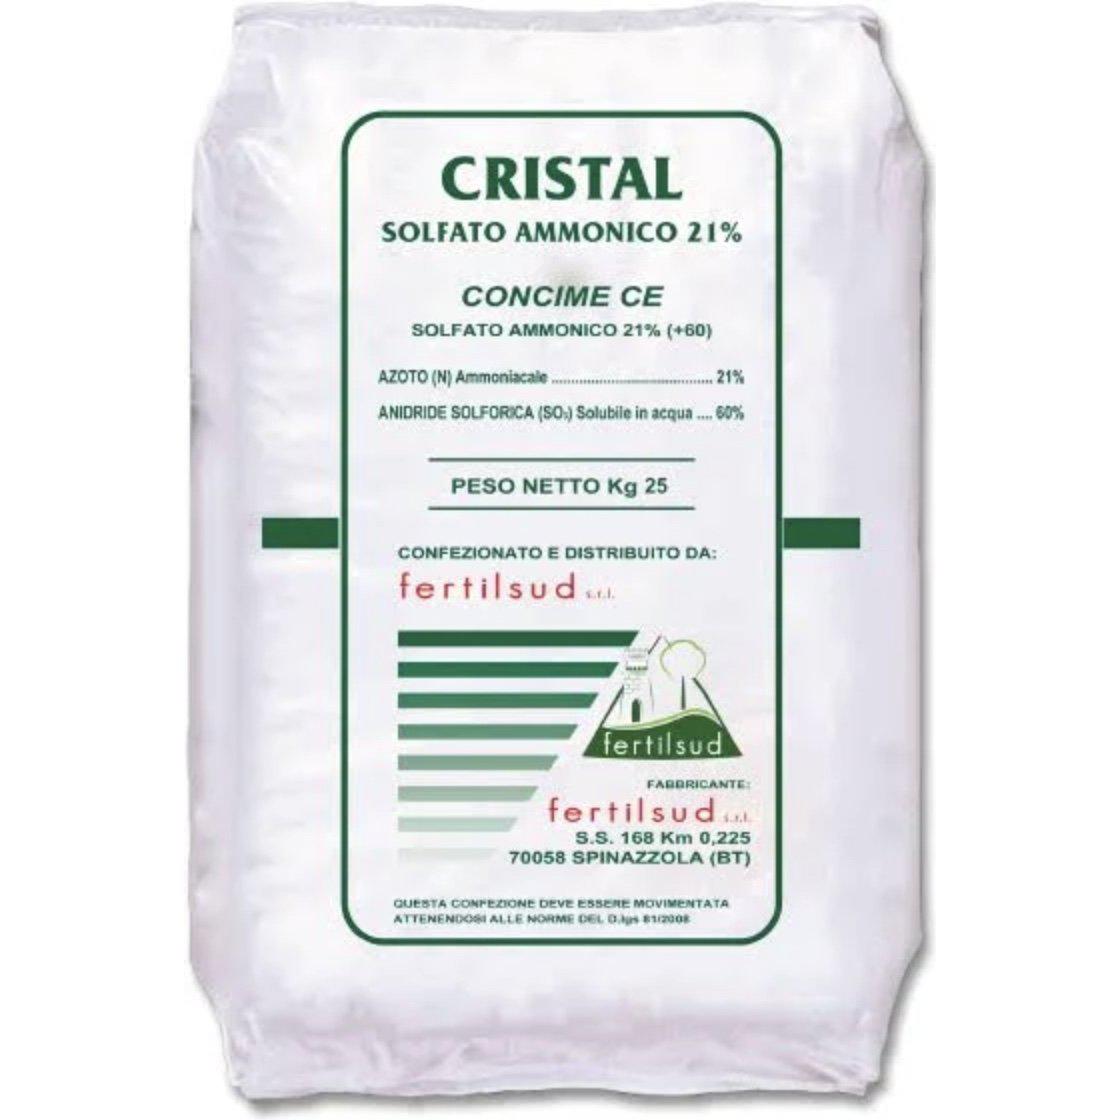 Cristal Fertilsud Solfato Ammonico sacco 25 kg concime azotato 21%-Ecanshop